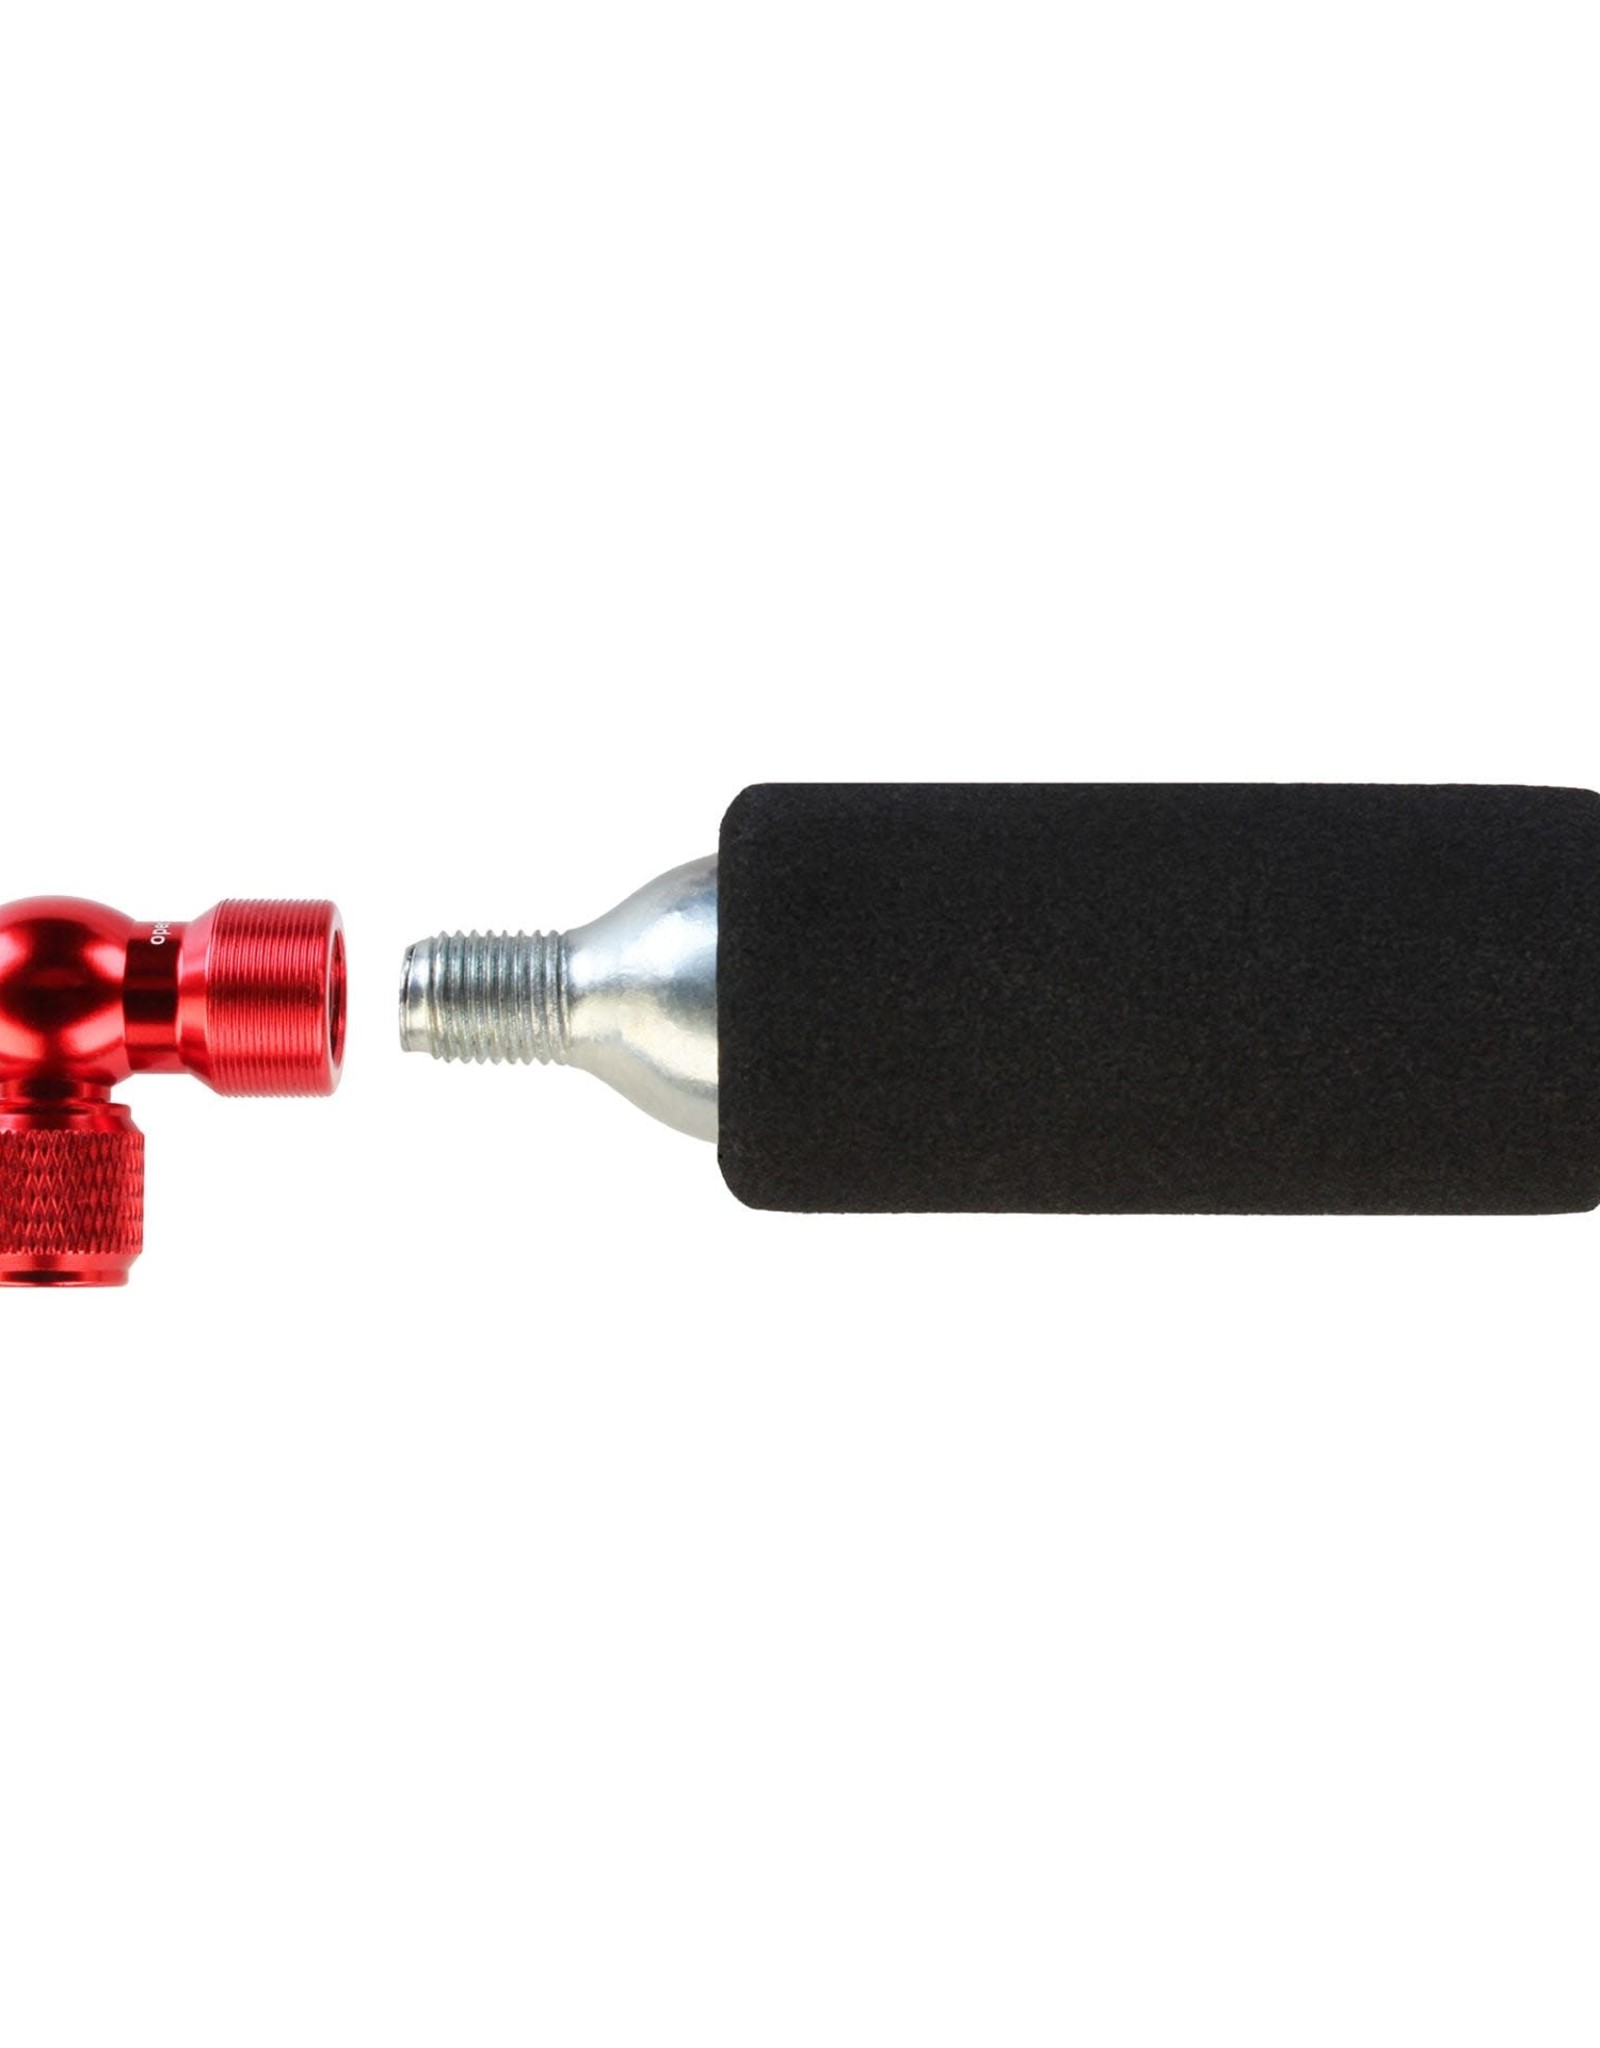 Prestacycle Prestaflator Micro CO2 Inflator Head - Includes Insulated Sleeve & 16gr cartridge, Red